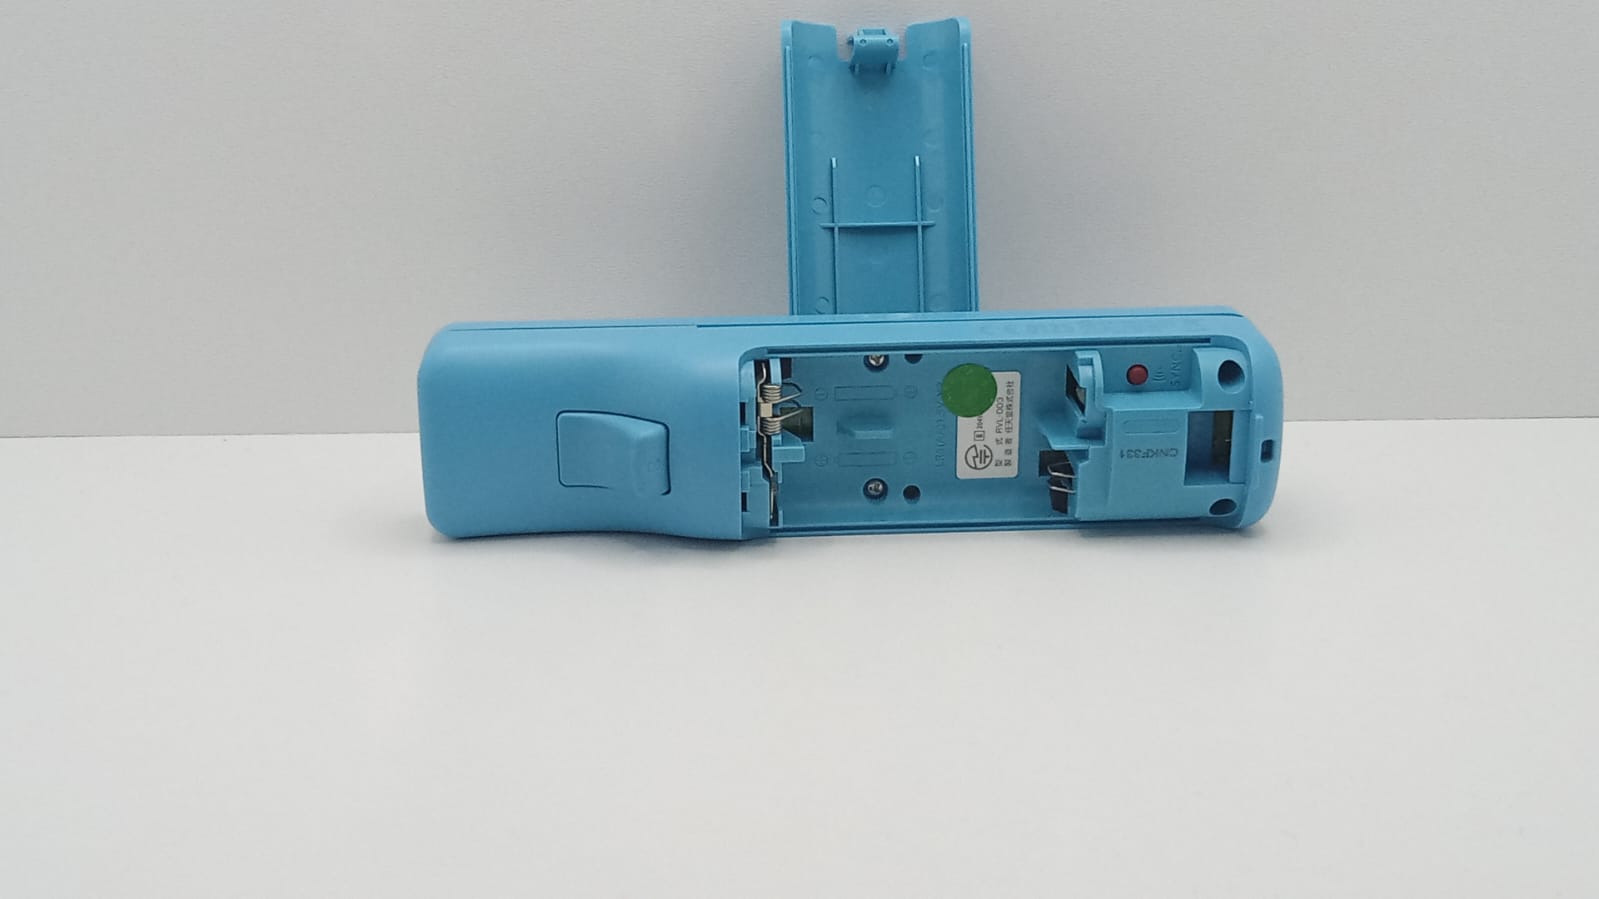 Nintendo Wii Remote  - Albastru - Original Nintendo - curatat si reconditionat